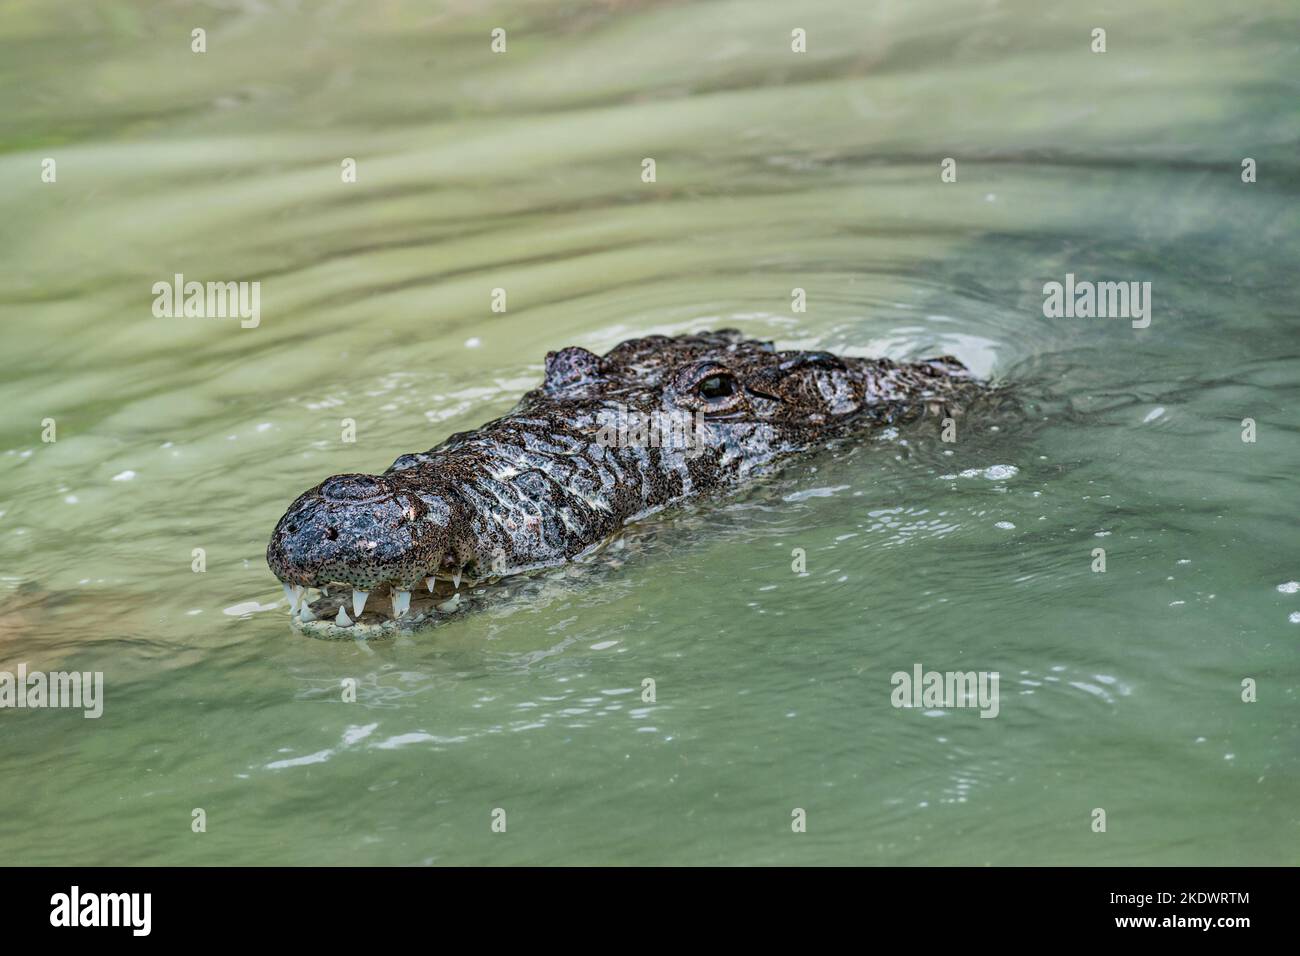 Aligator's head above water in Rio Lagartos, Mexico. Stock Photo